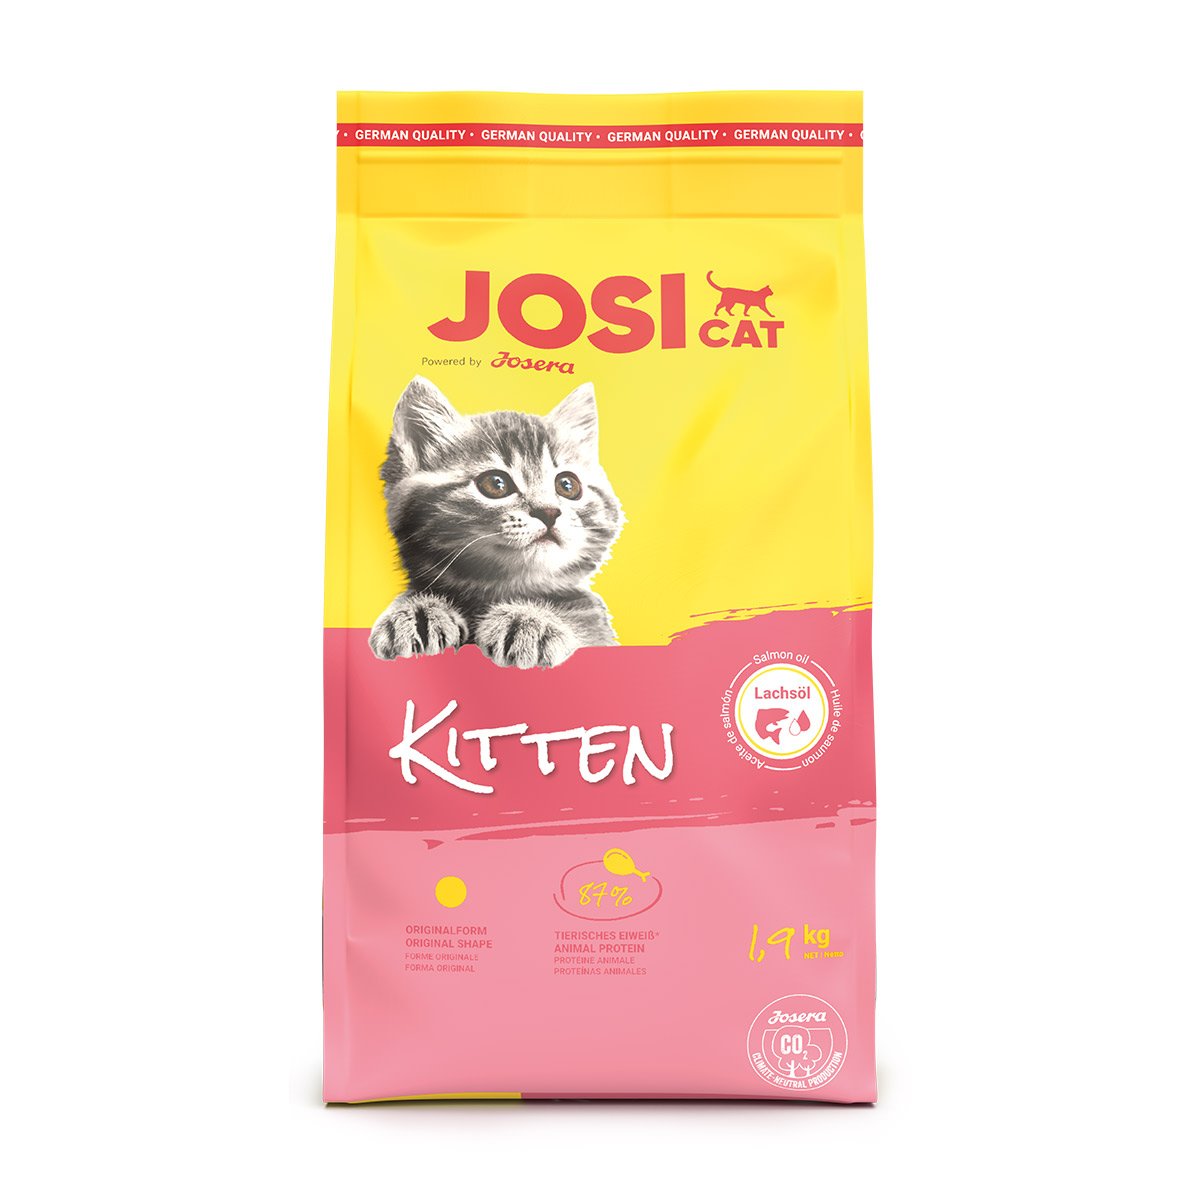 JosiCat Kitten 1,9kg von JosiCat